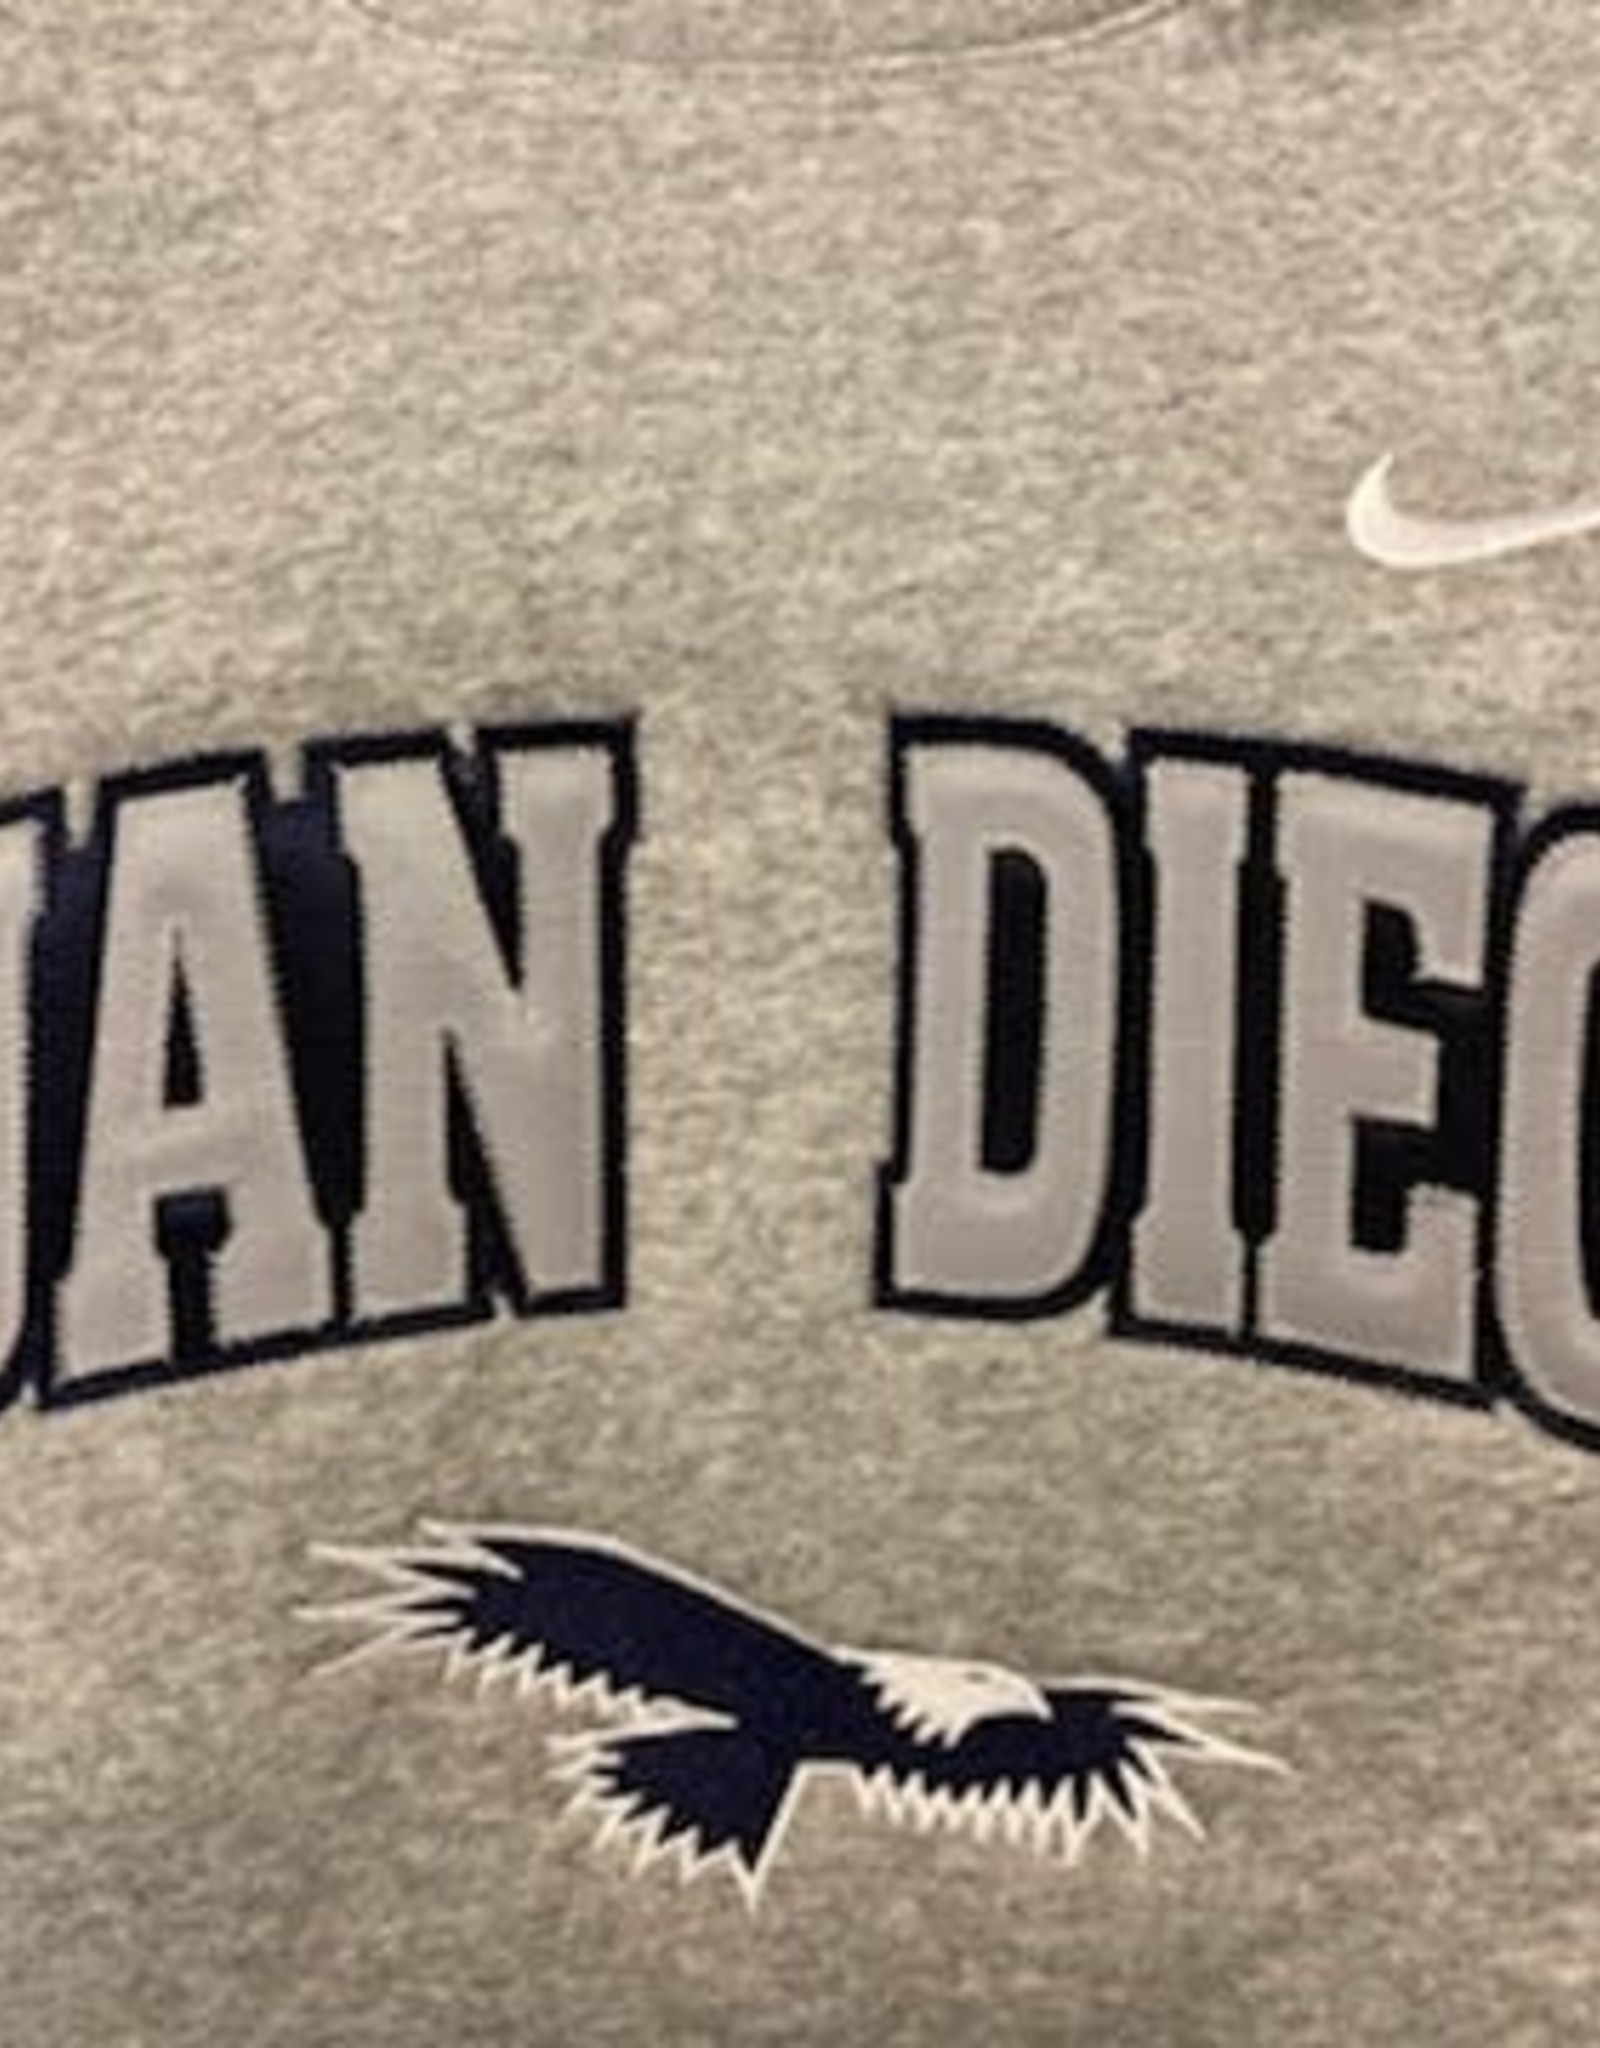 NON-UNIFORM Juan Diego Tackle Twill Eagle, Nike Crew Sweatshirt